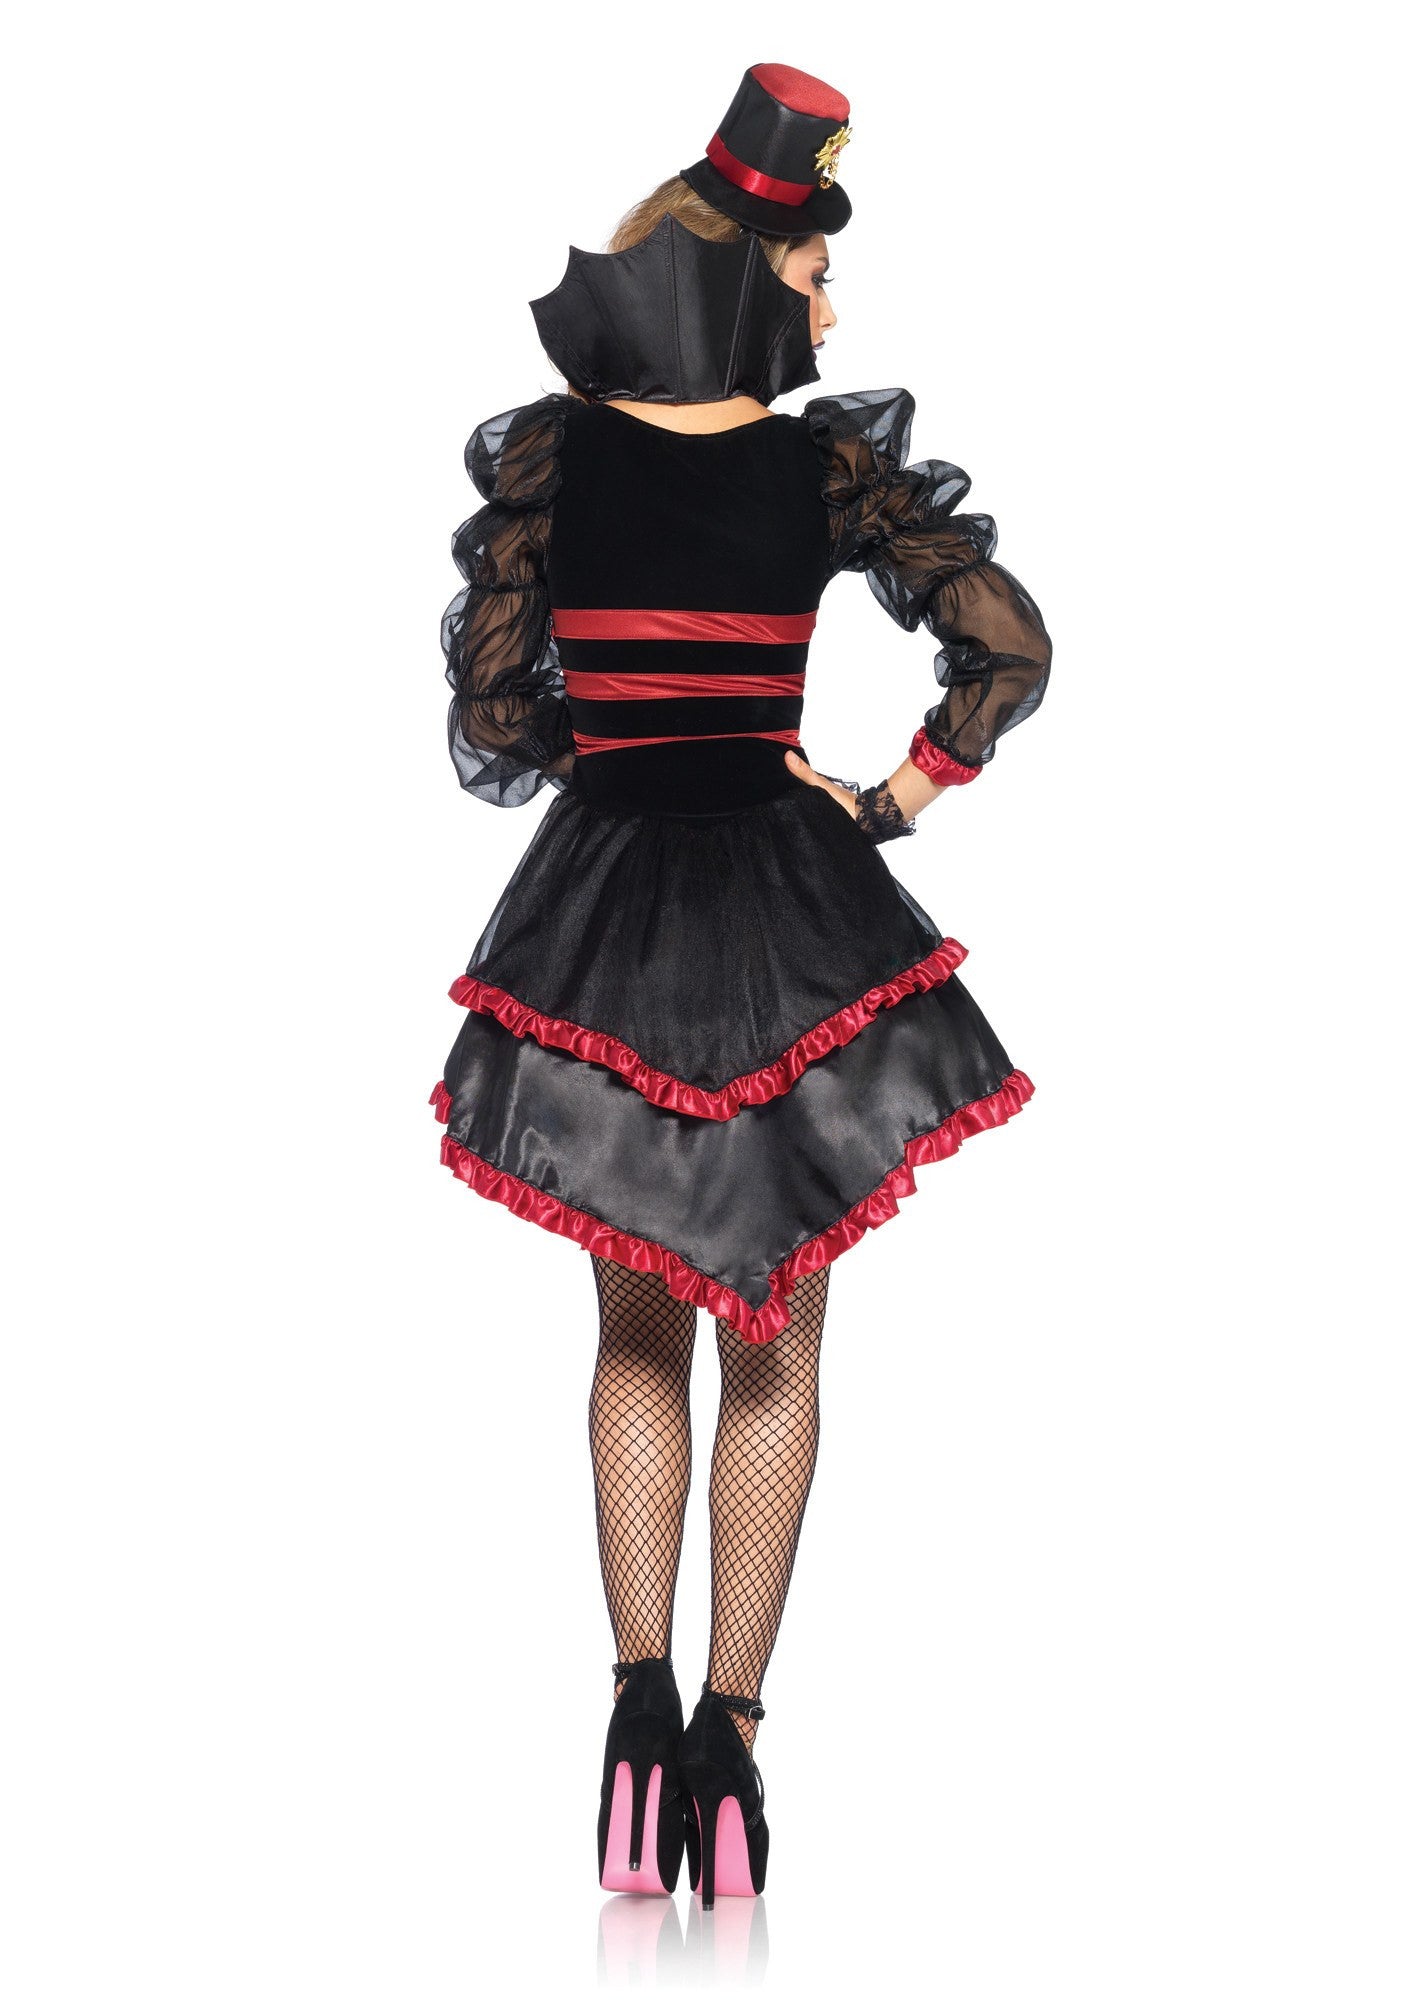 Costume - Victorian Vamp Costume